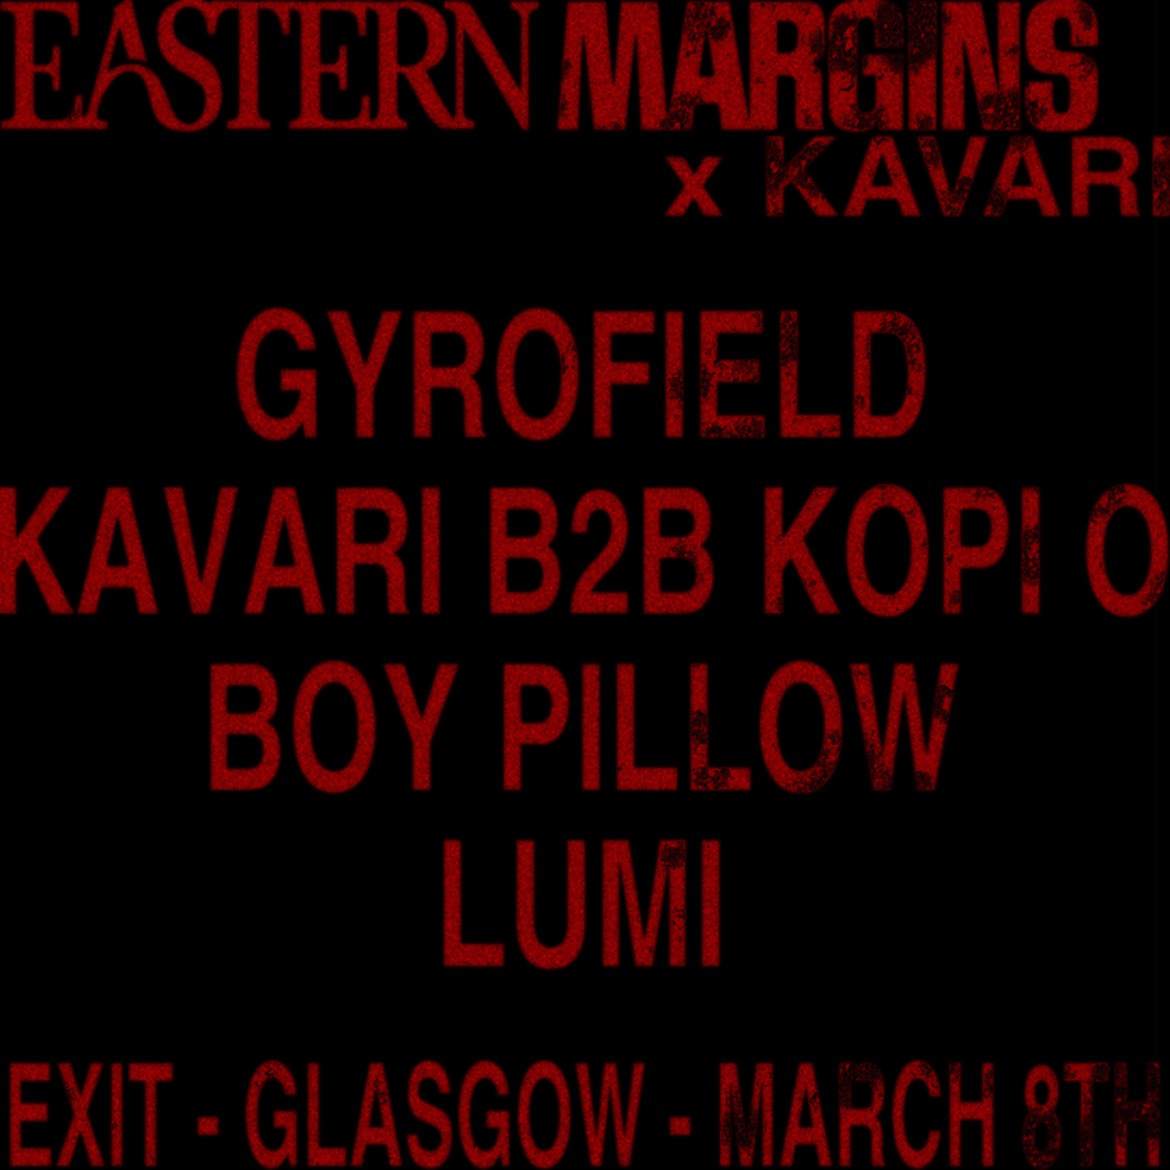 Eastern Margins x KAVARI: 𝖗𝖔𝖆𝖉 ∞ 𝖗𝖊𝖉𝖑𝖎𝖓𝖊 with Gyrofield, KAVARI, KOPI O, Boy Pillow  - フライヤー表